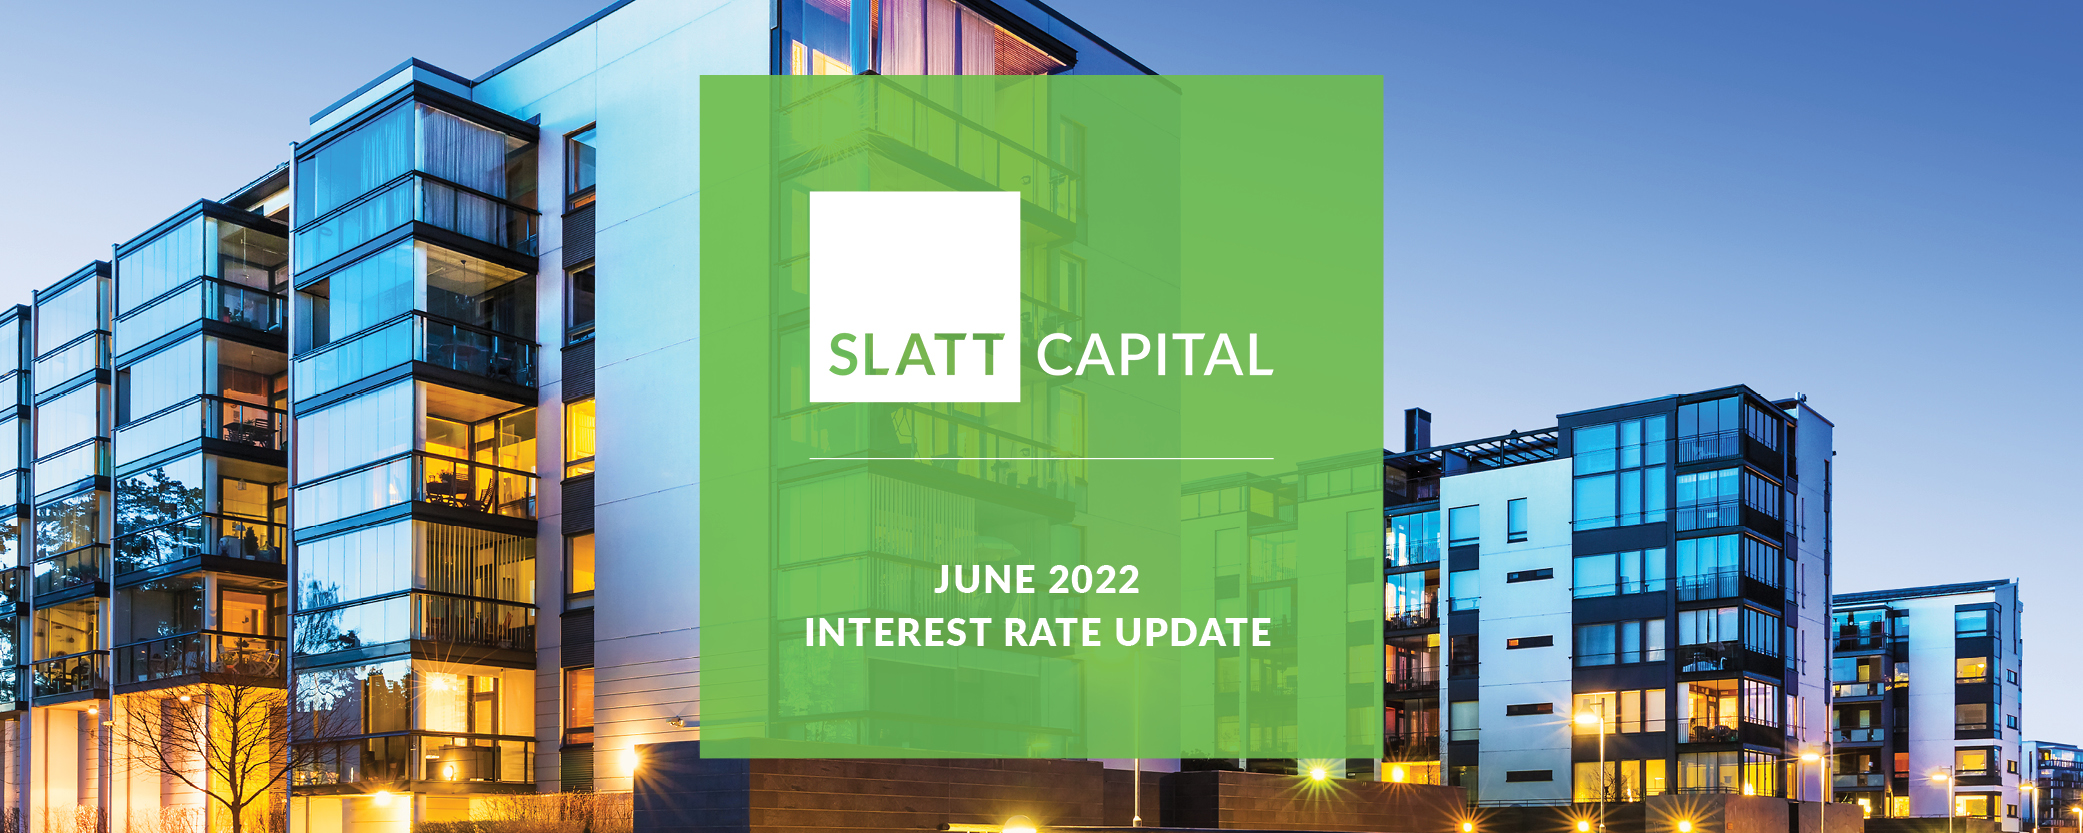 June 2022 interest rate update